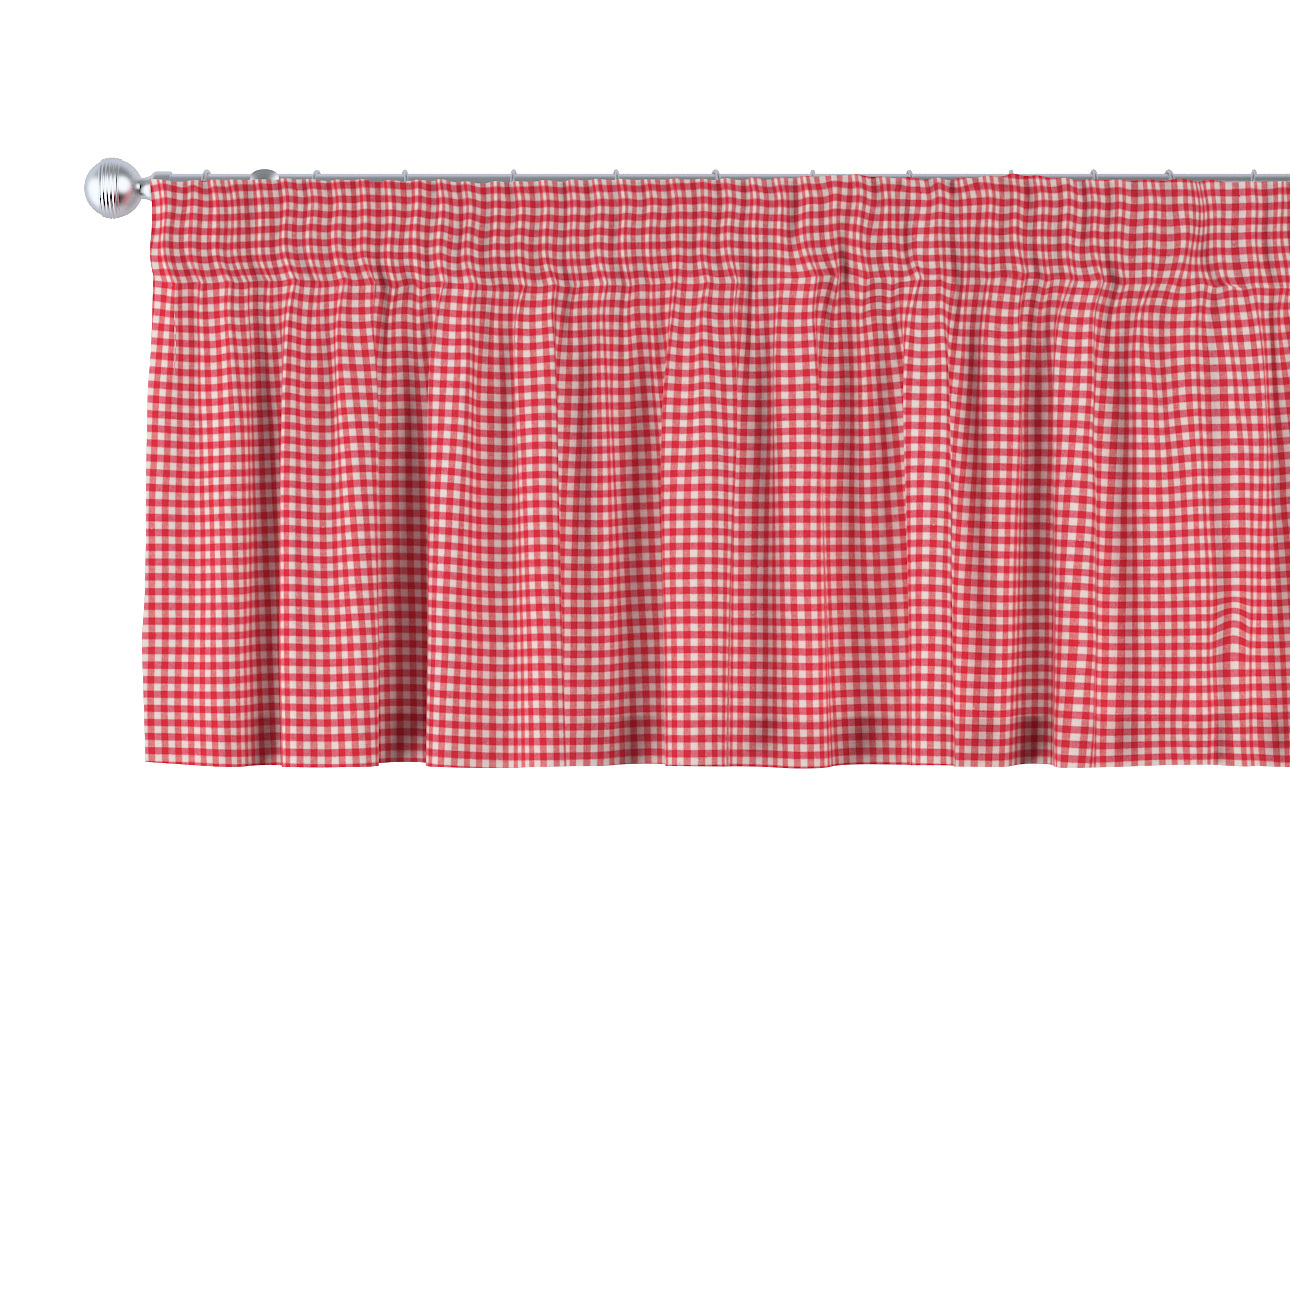 Kurzgardine mit Kräuselband, rot-ecru , 260 x 40 cm, Quadro (136-15) günstig online kaufen